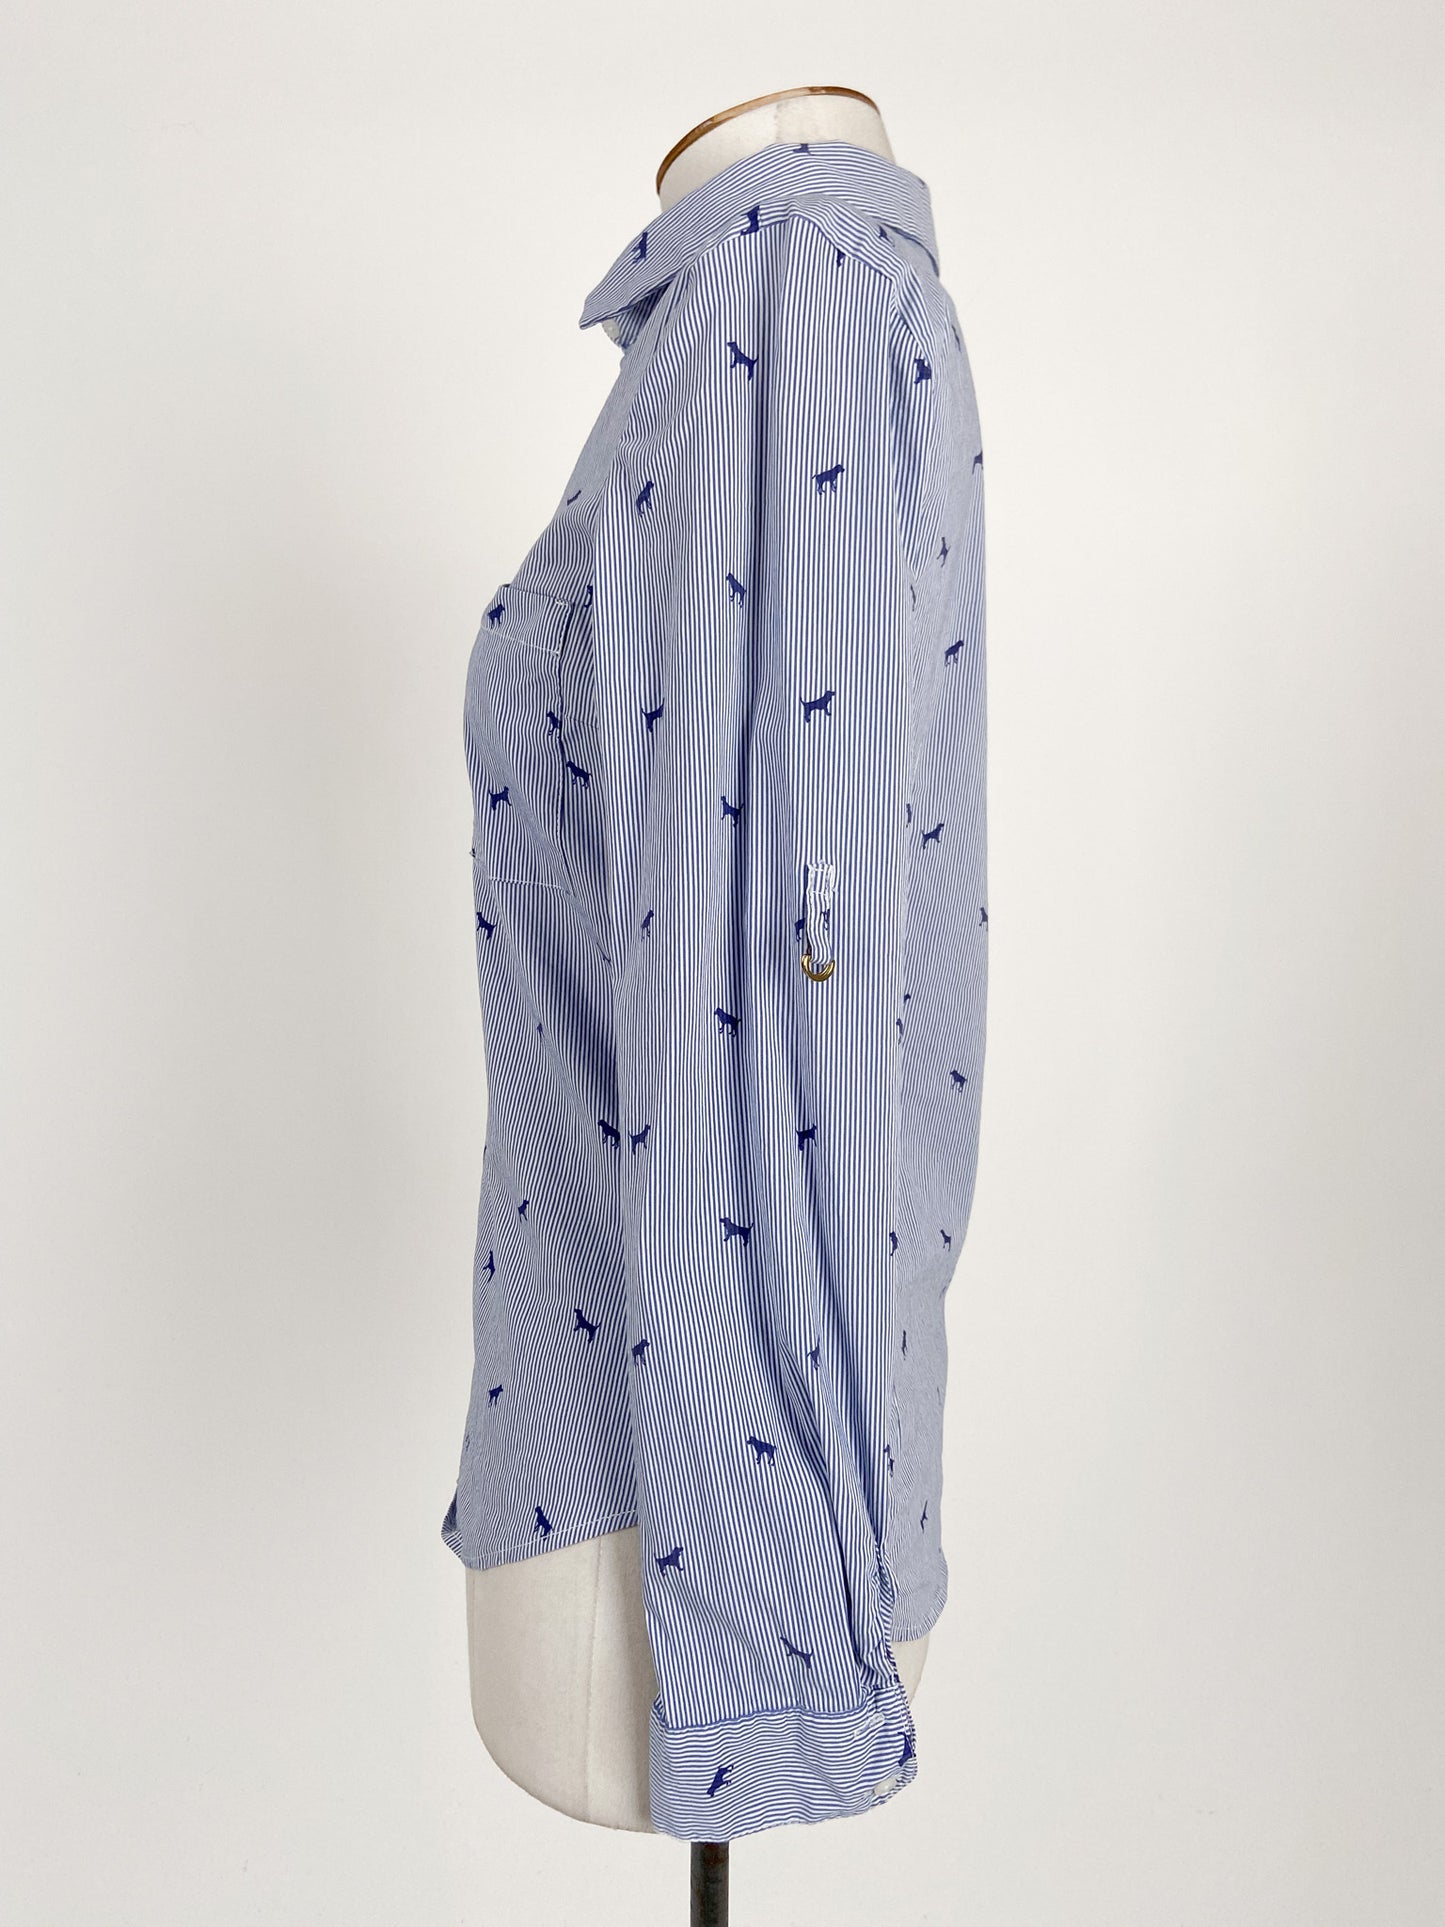 Zara | Blue Casual Top | Size S